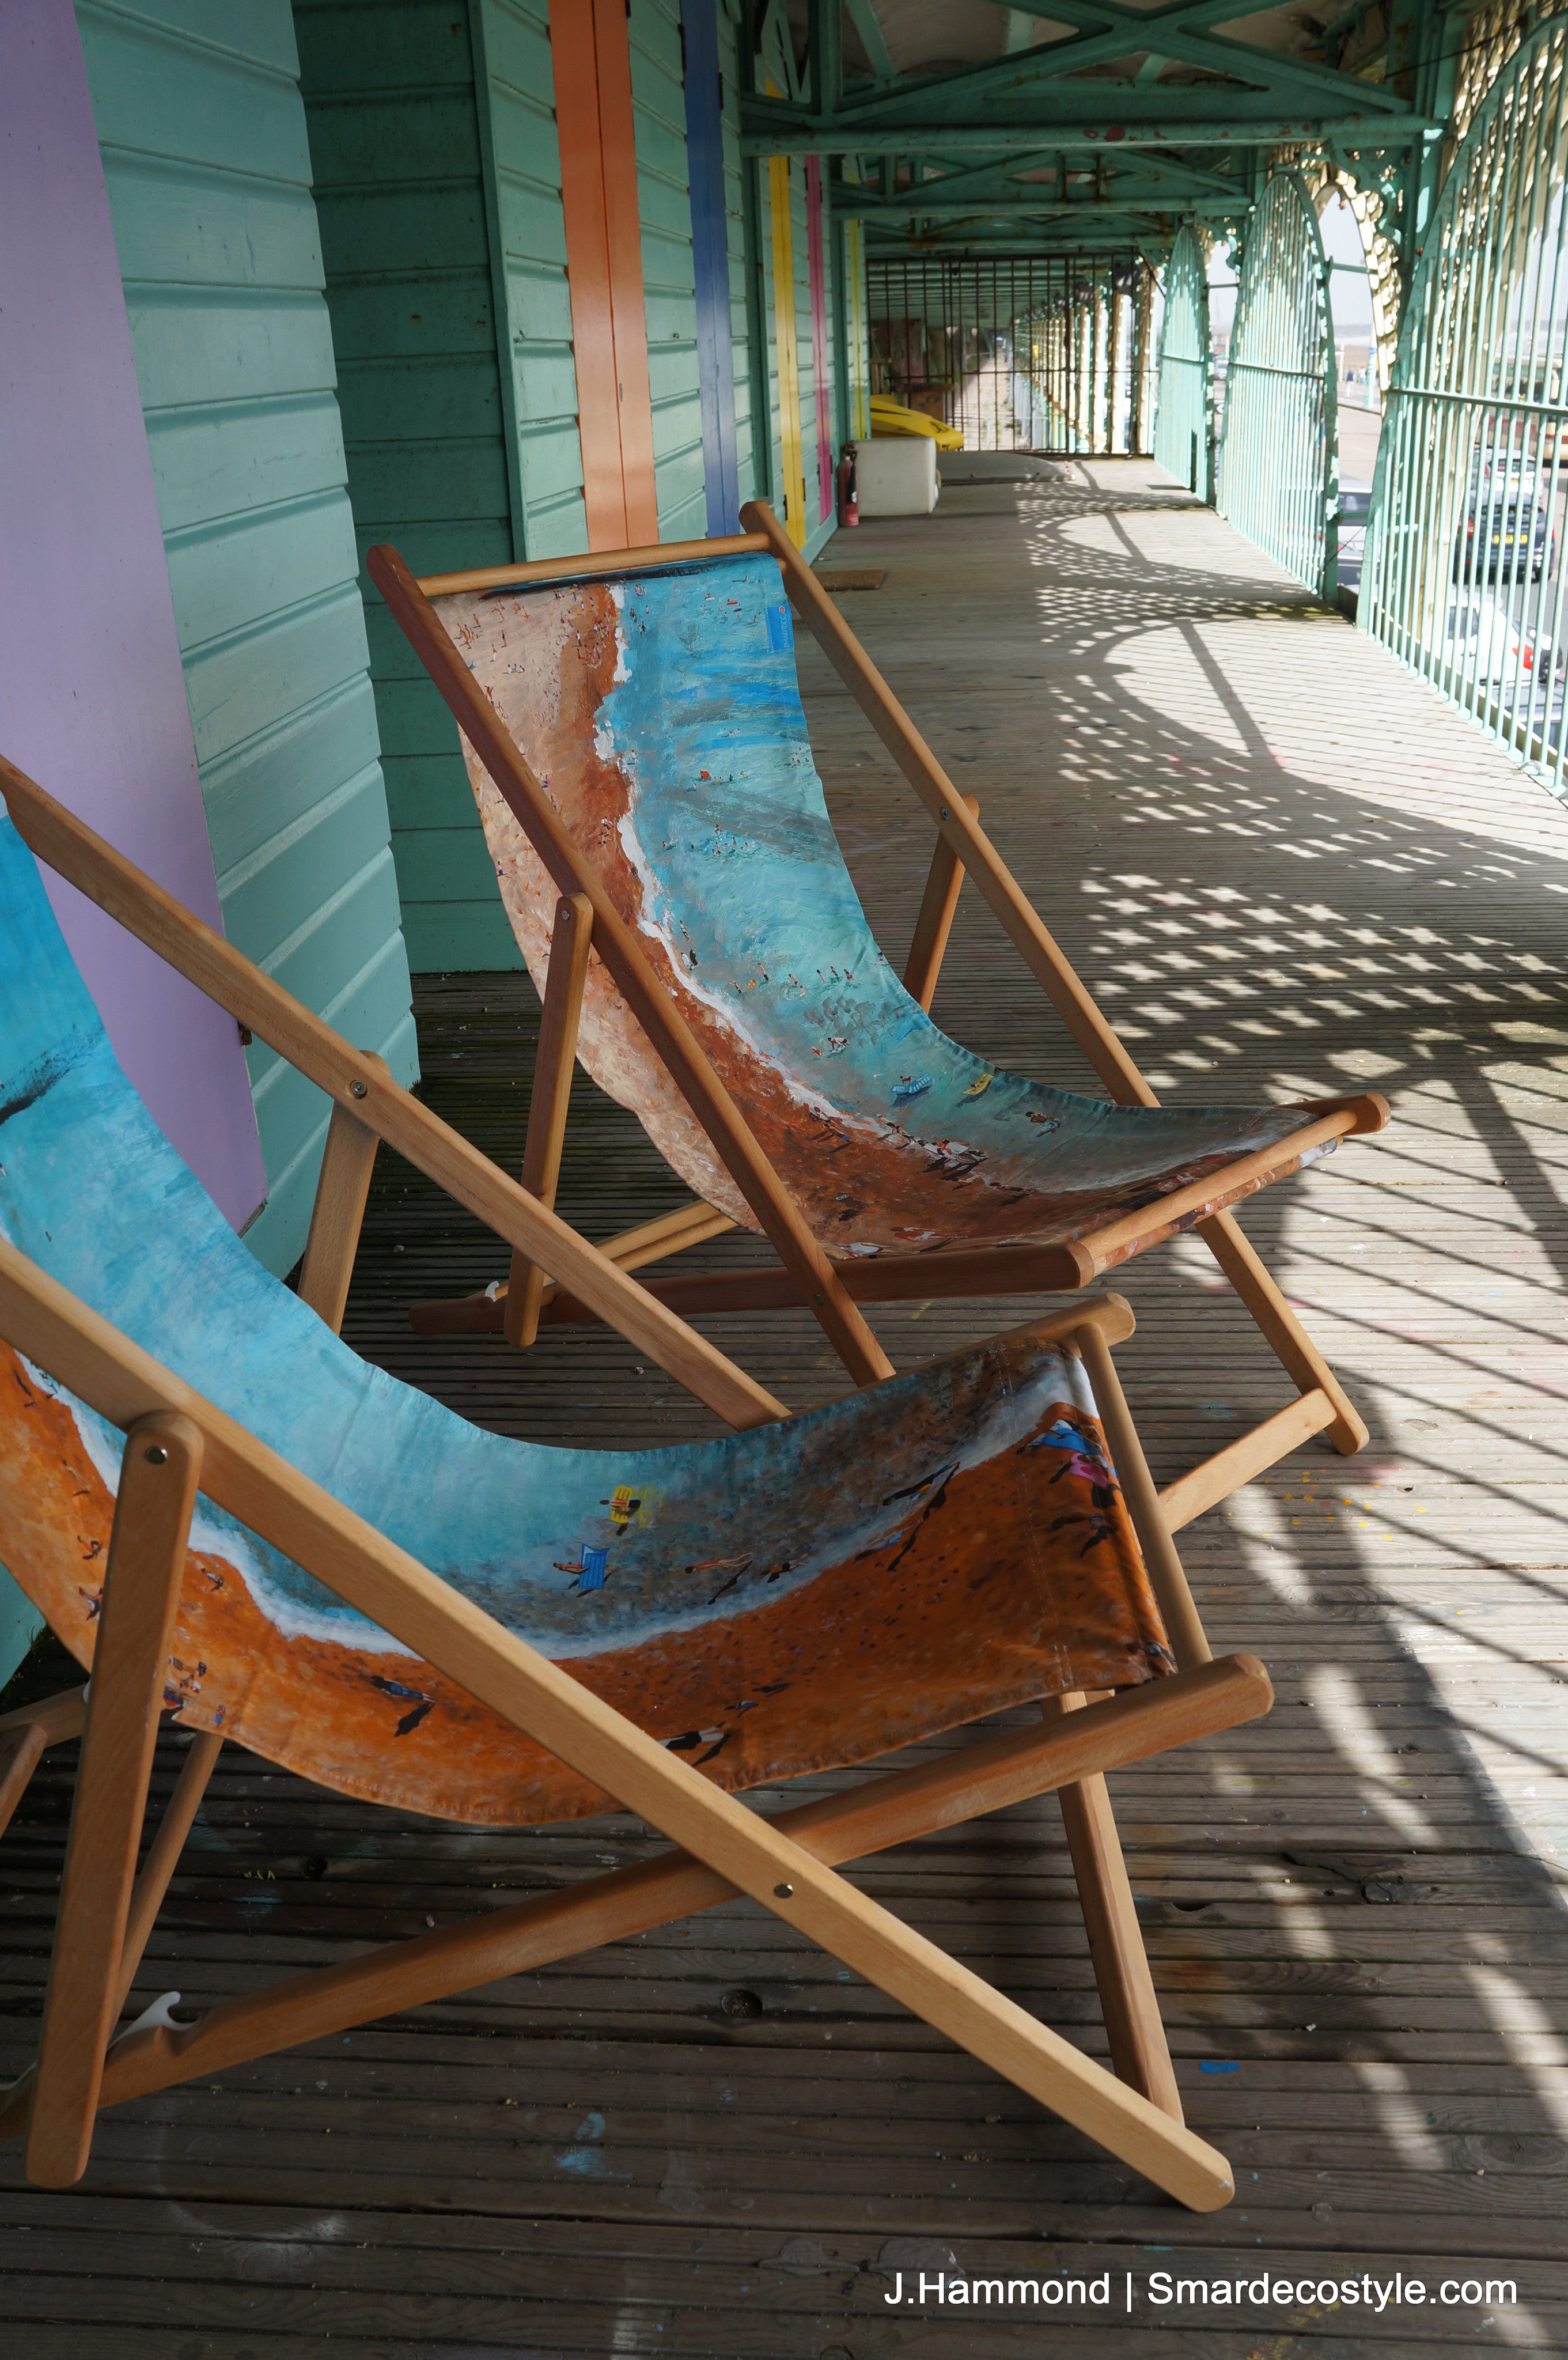 Deckchair - Traditional Seaside - Life's a Beach  Smart Deco Homeware Lighting and Art by Jacqueline hammond